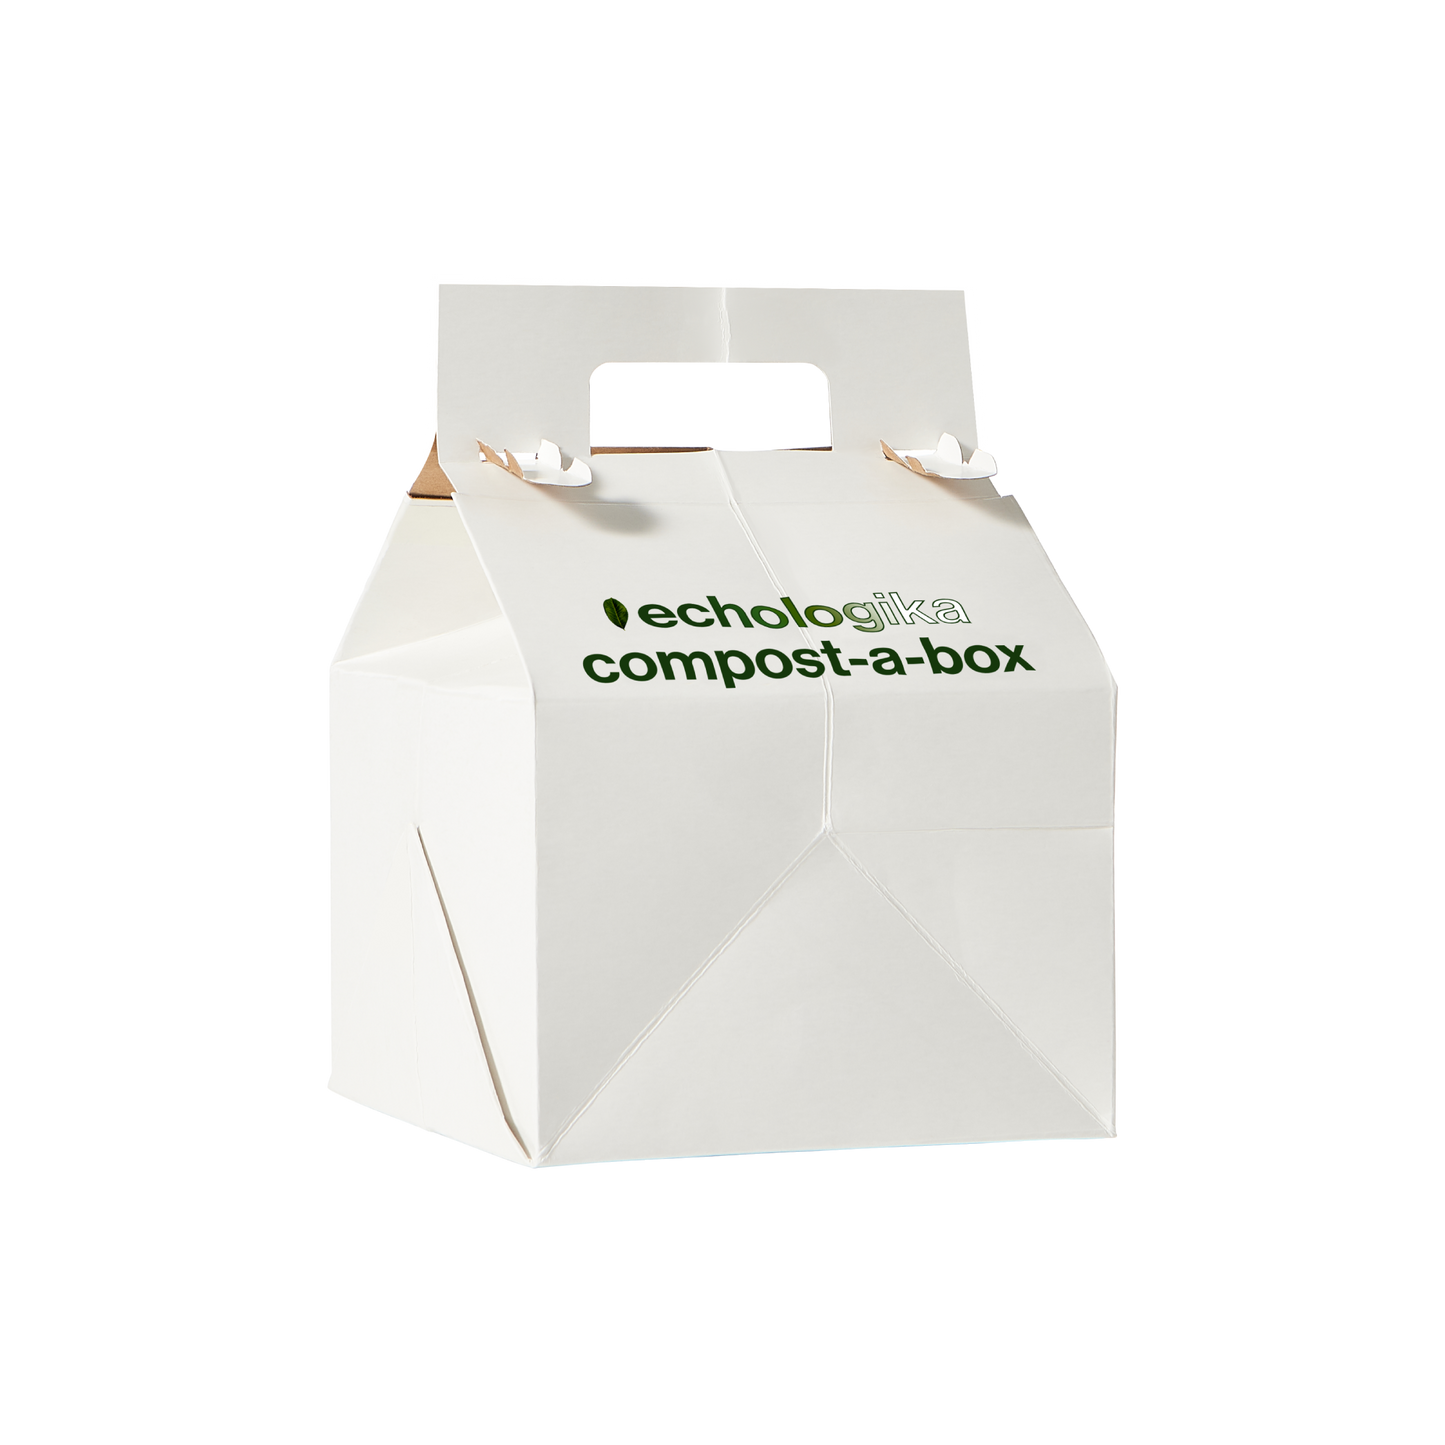 Compost-a-box